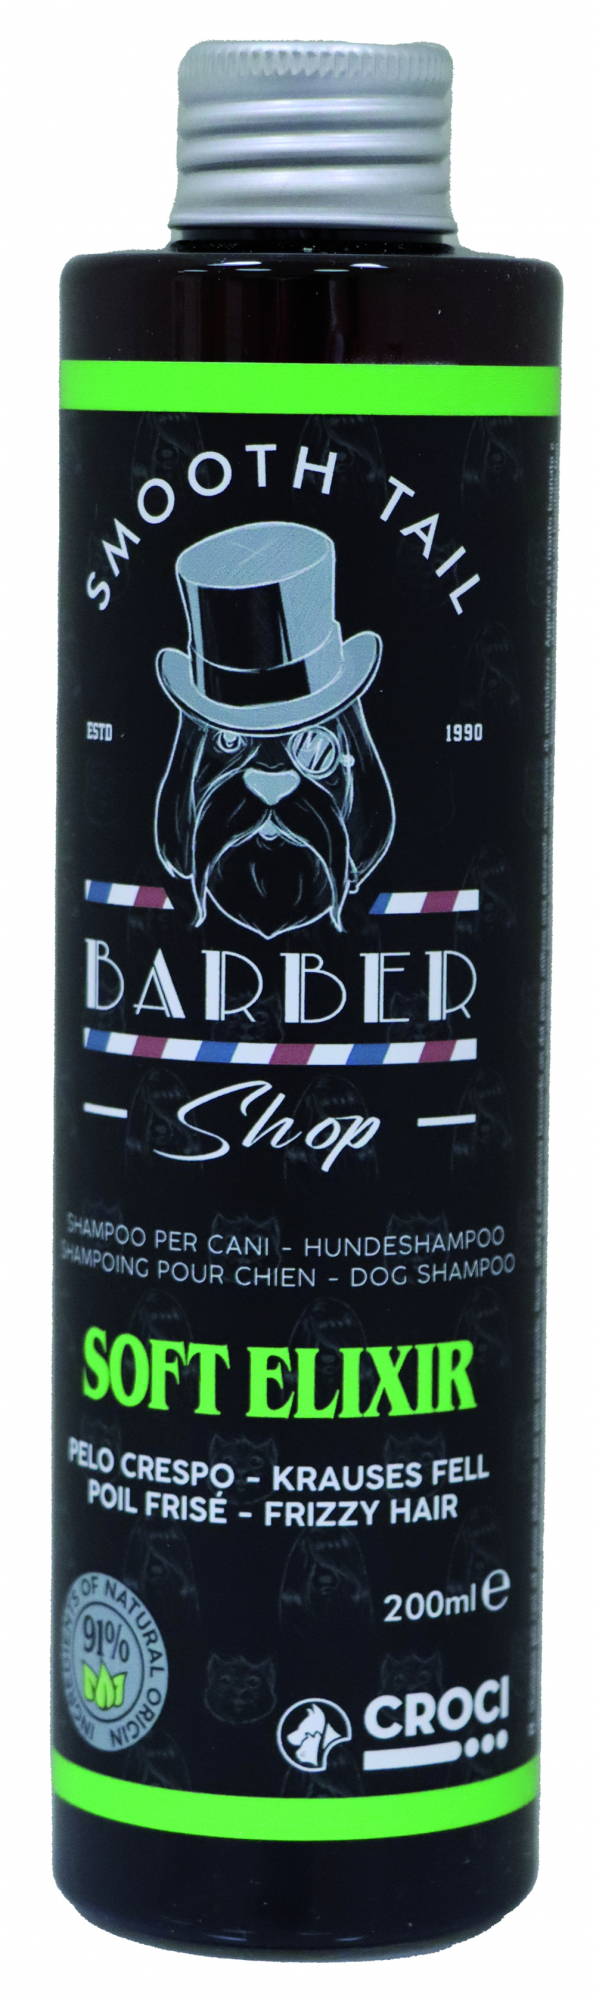 BARBERSHOP Soft Elixir Shampoo für Hunde mit krausem Fell